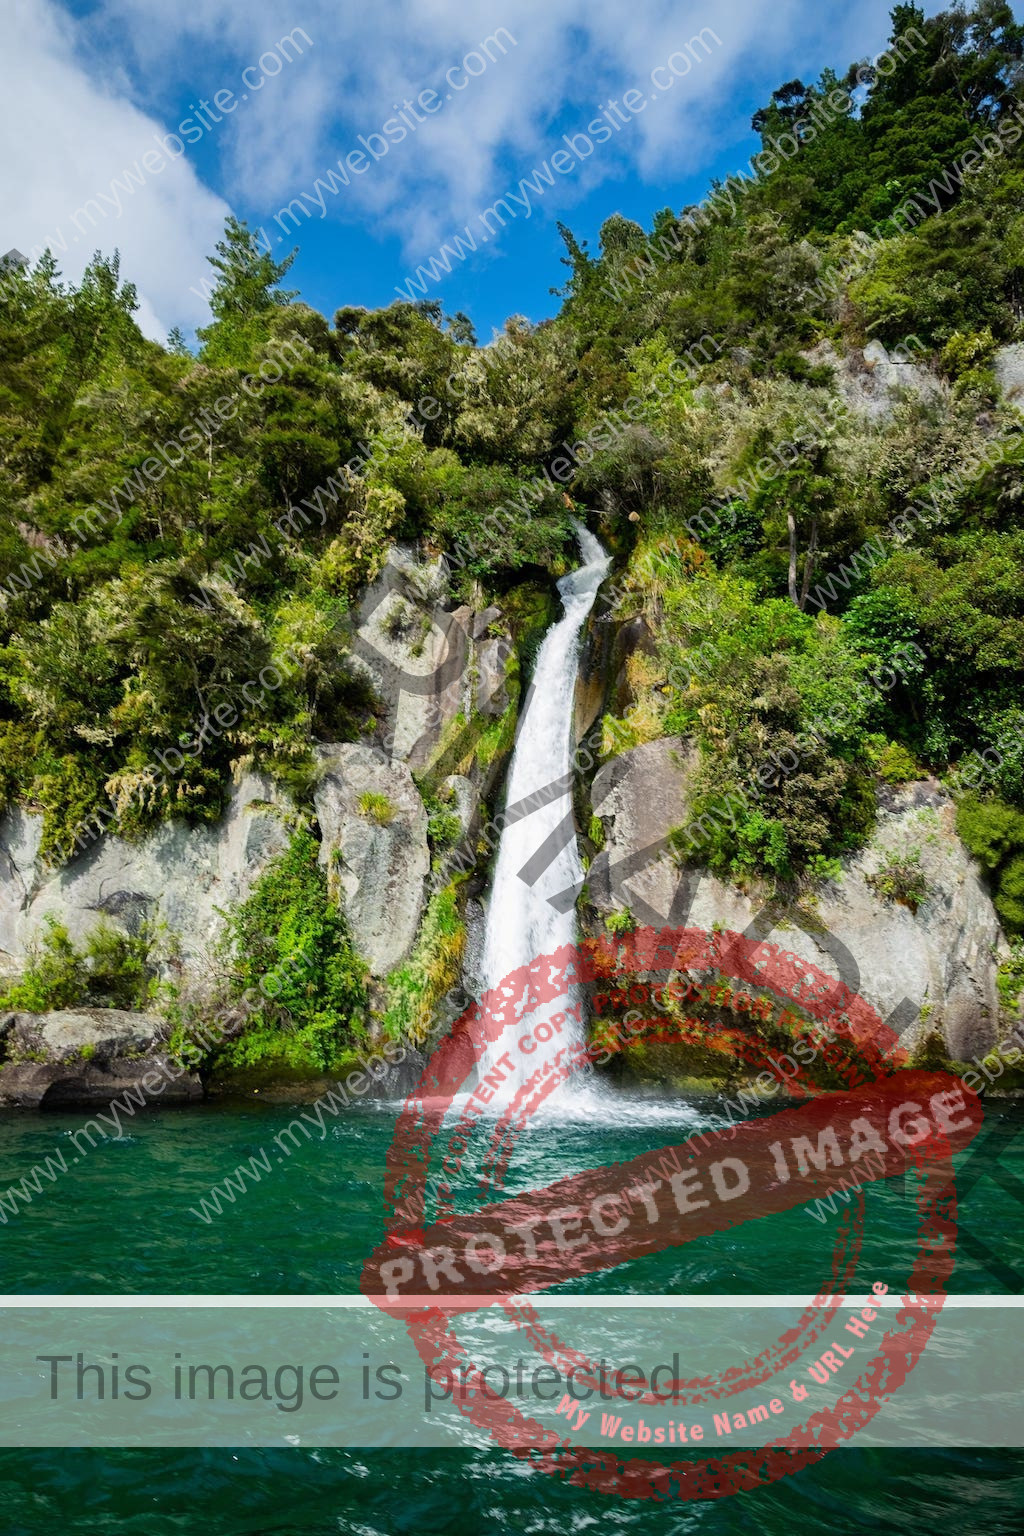 waterfall with lush green vegetation